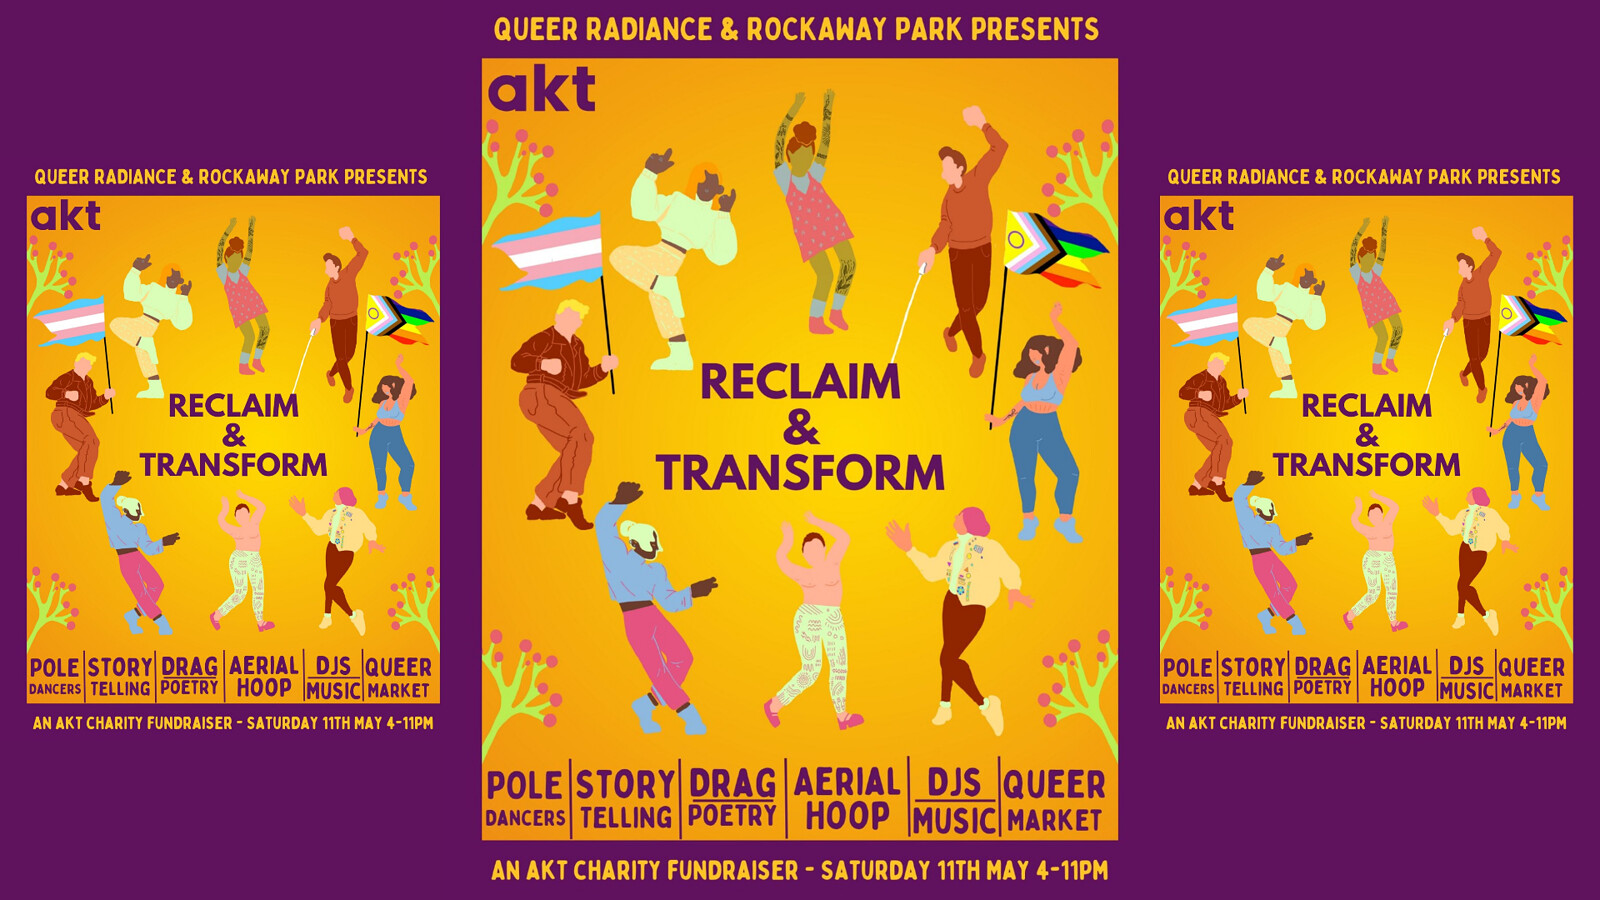 Queer Radiance - Reclaim & Transform at Rockaway Park